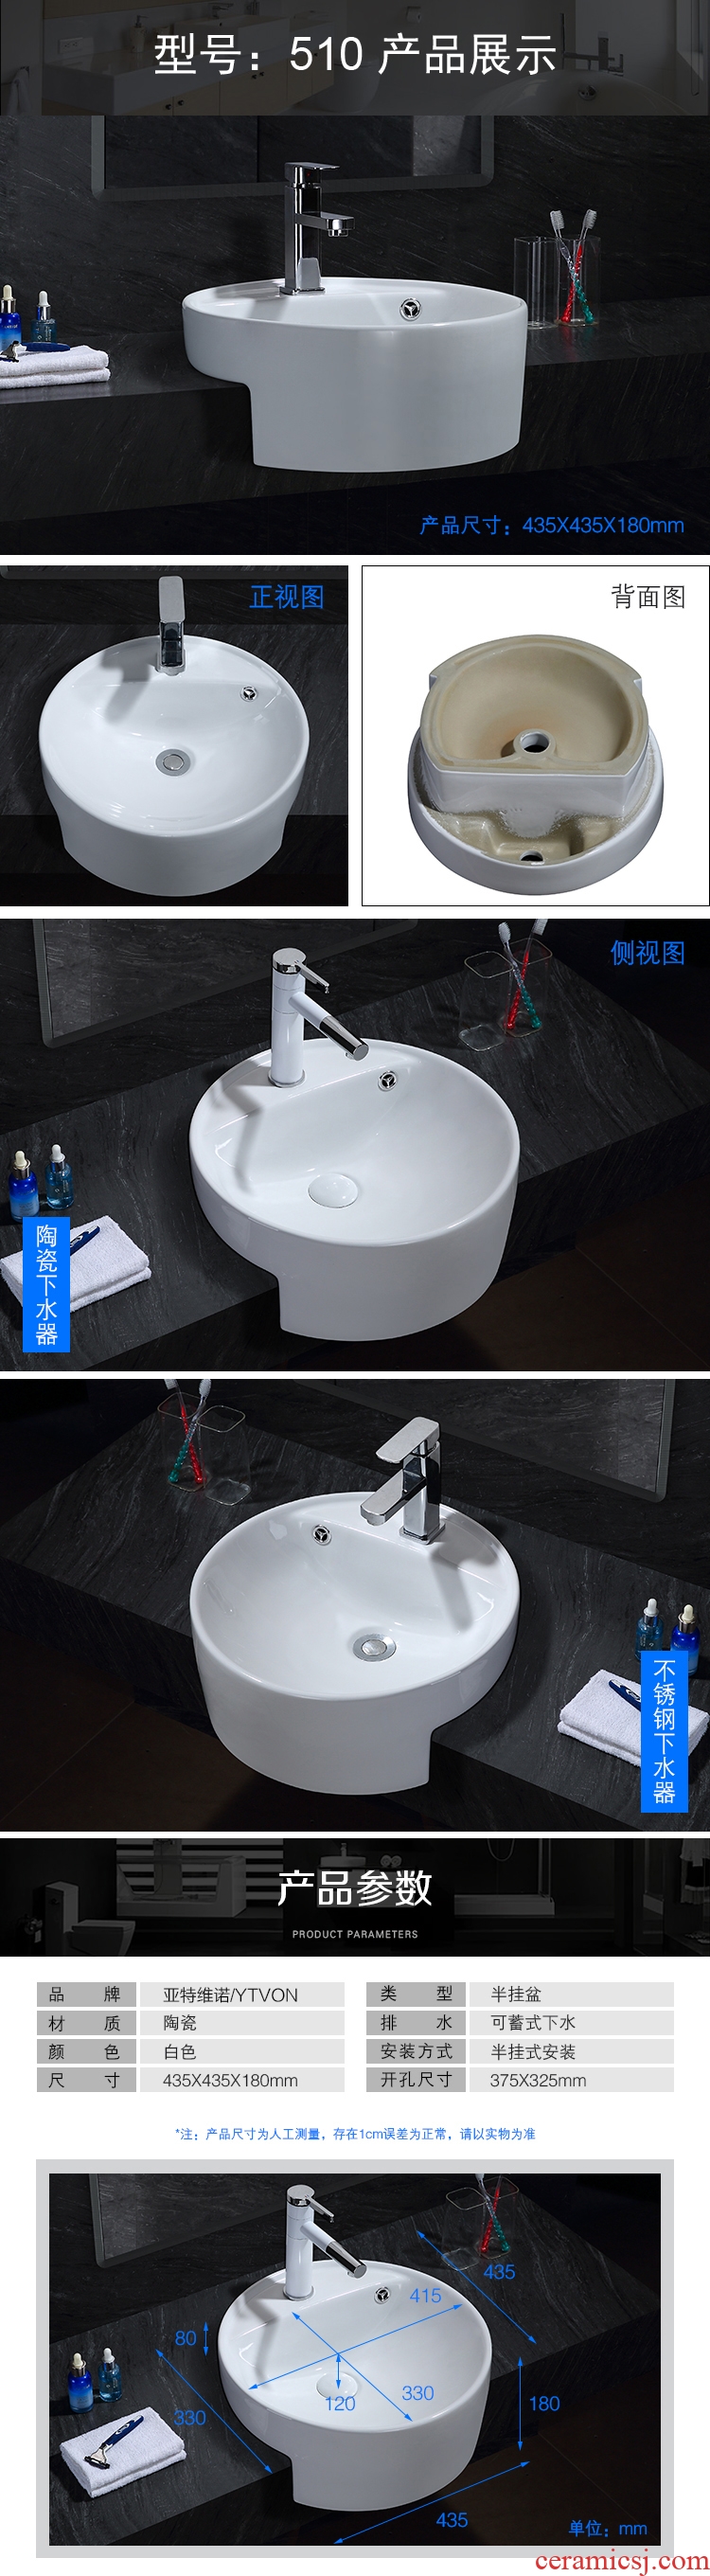 Atlantis corvino taichung basin half embedded platform basin sinks and hang basin household square ceramic lavabo